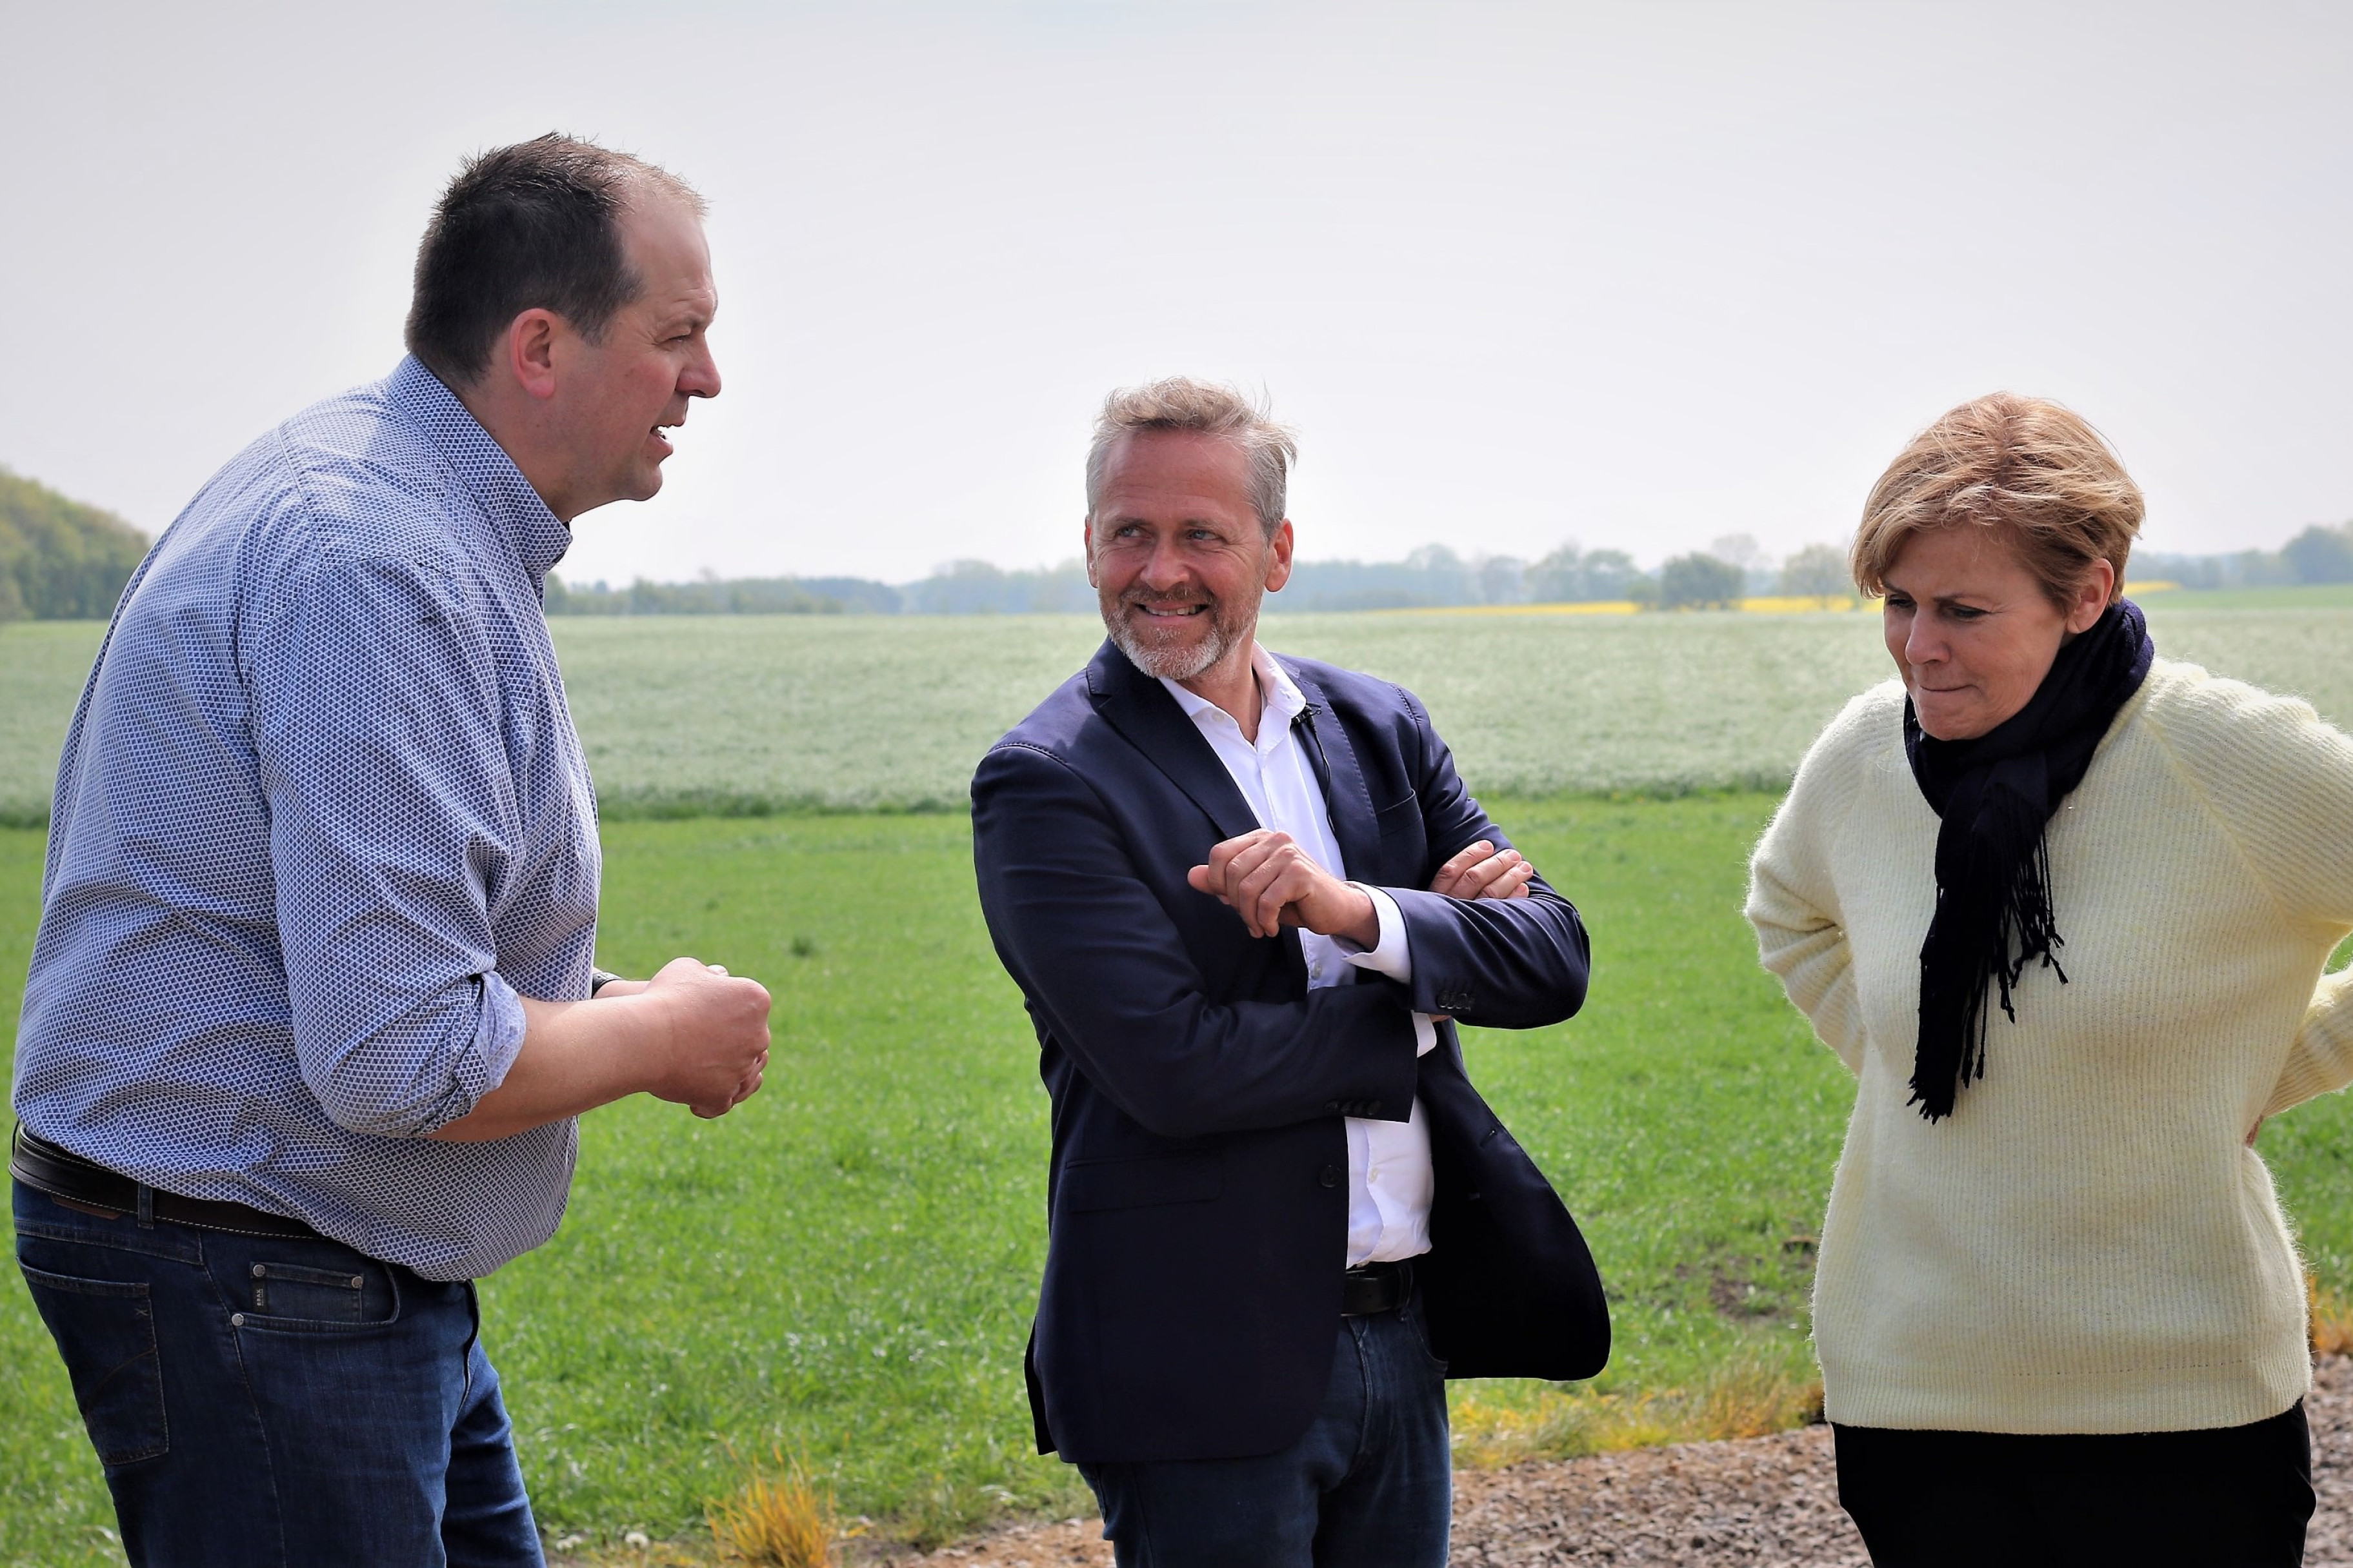 Mælkeproducent Christian Lund, Anders Samuelsen og Mette Bock står på Christian Lunds bedrift og snakker